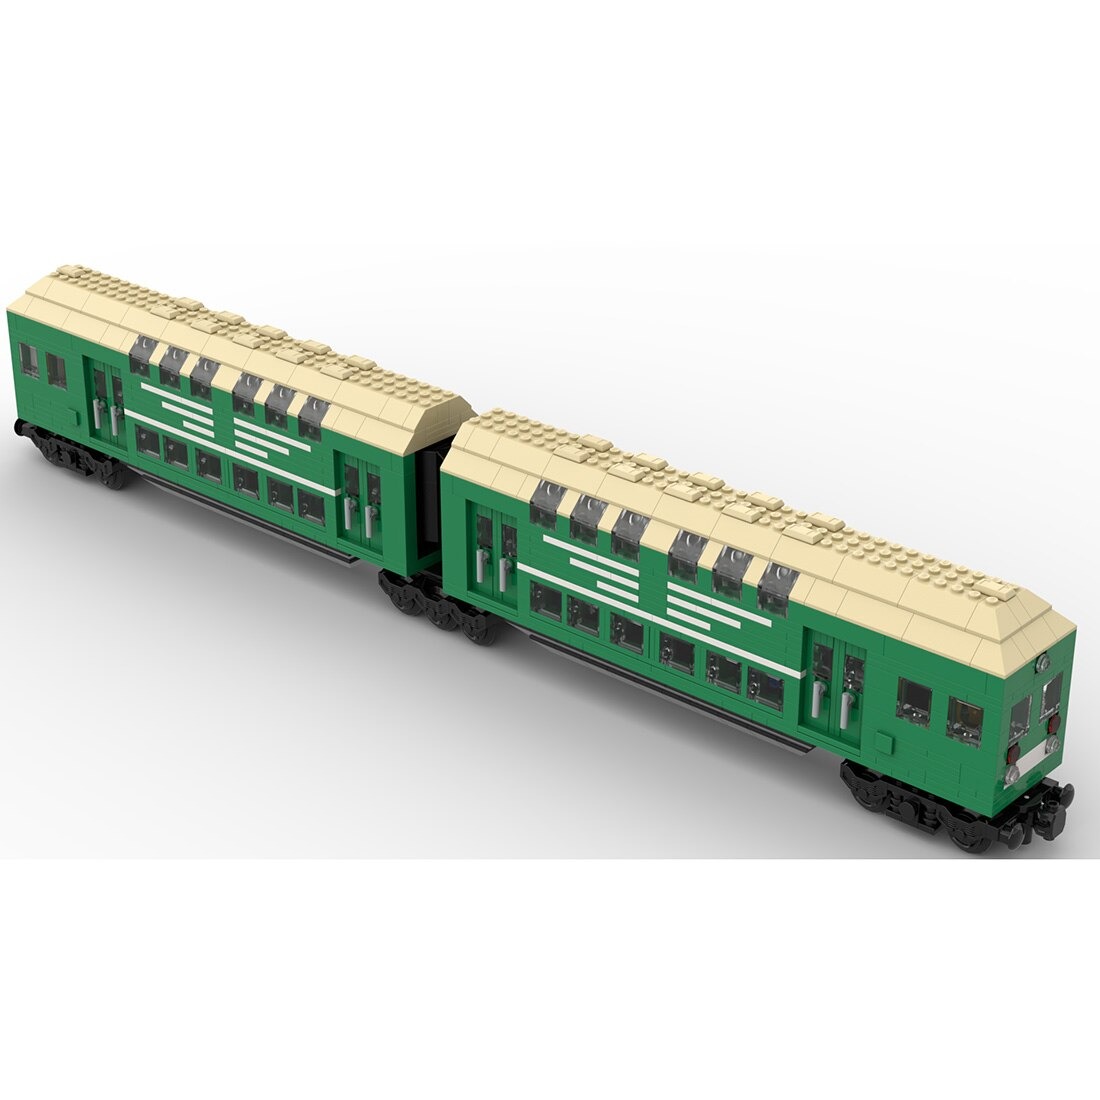 authorized moc 109281 7 axle train carri main 4 2 - KAZI Block